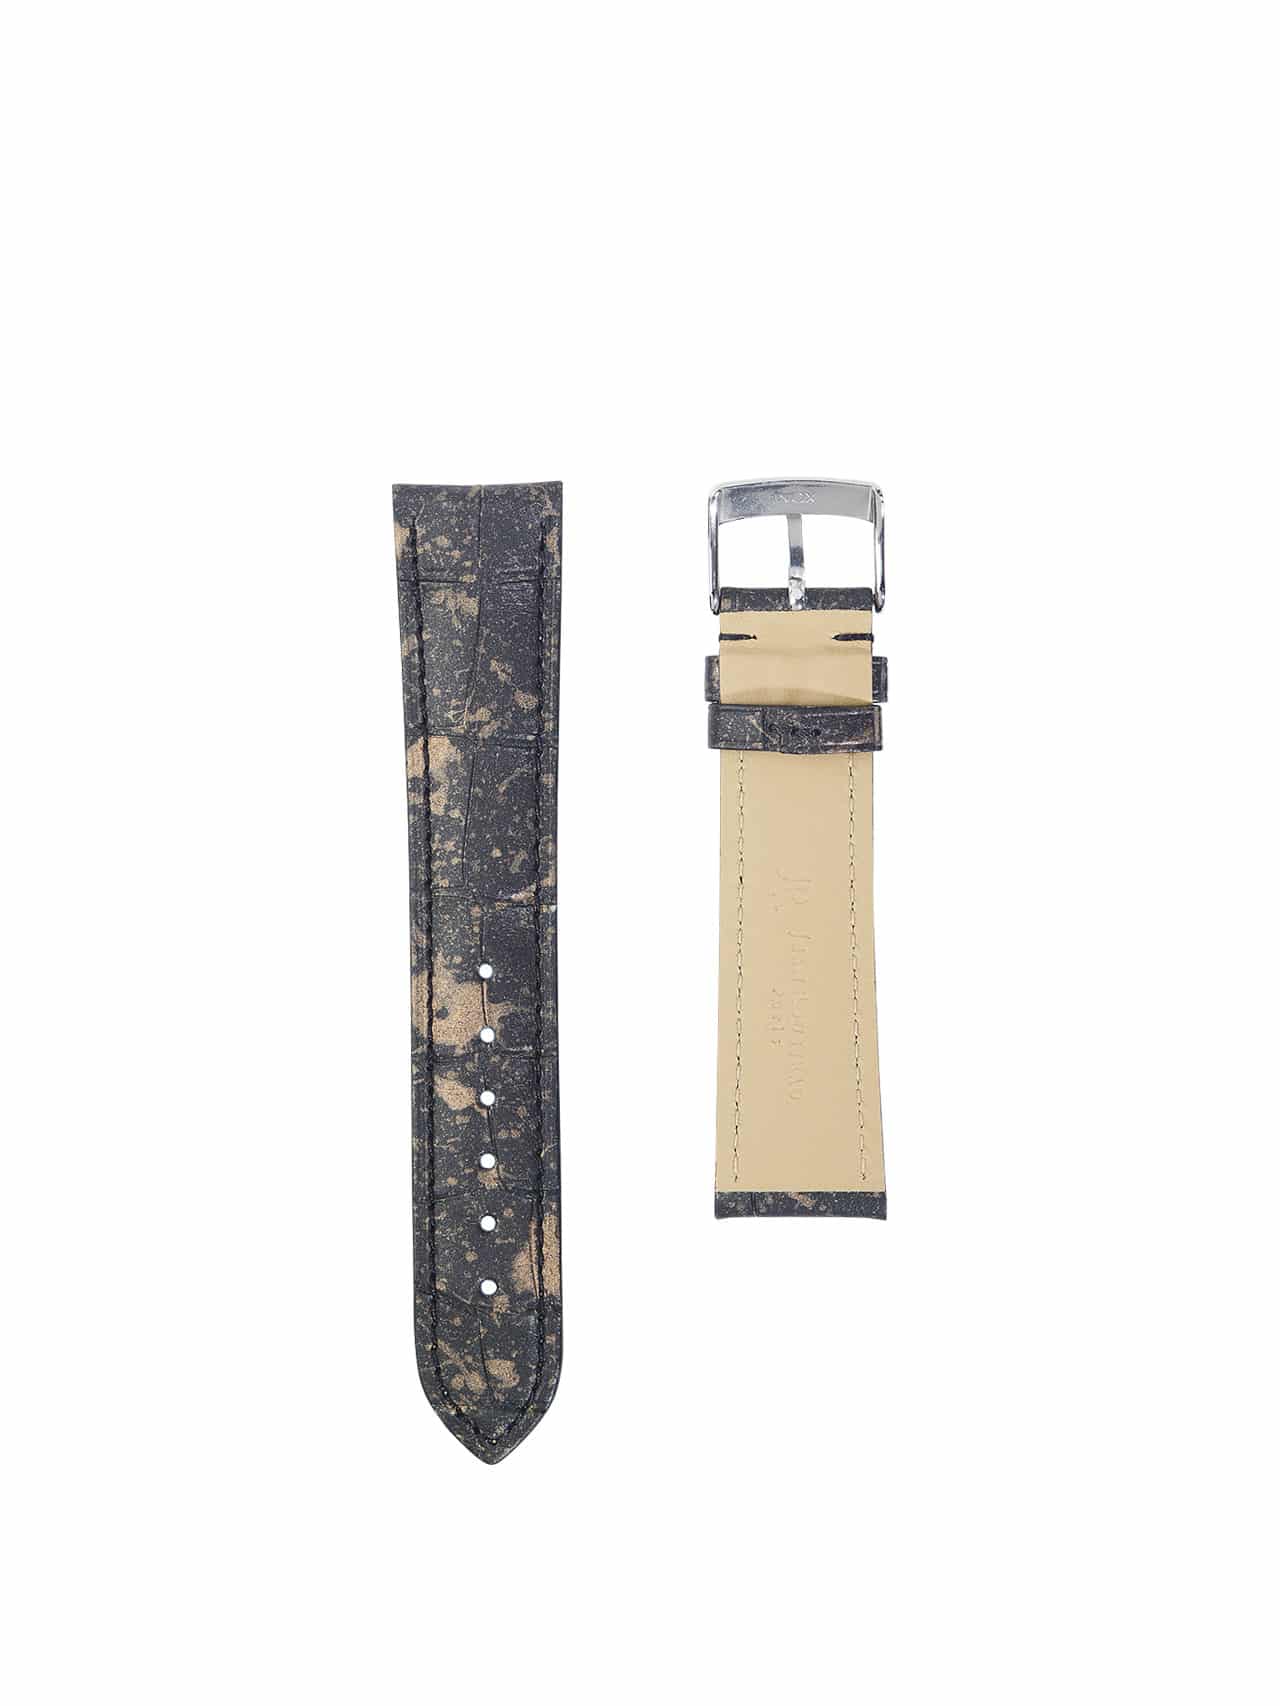 Watch strap 3.5 Asteria rubber touch crocodile bronze back